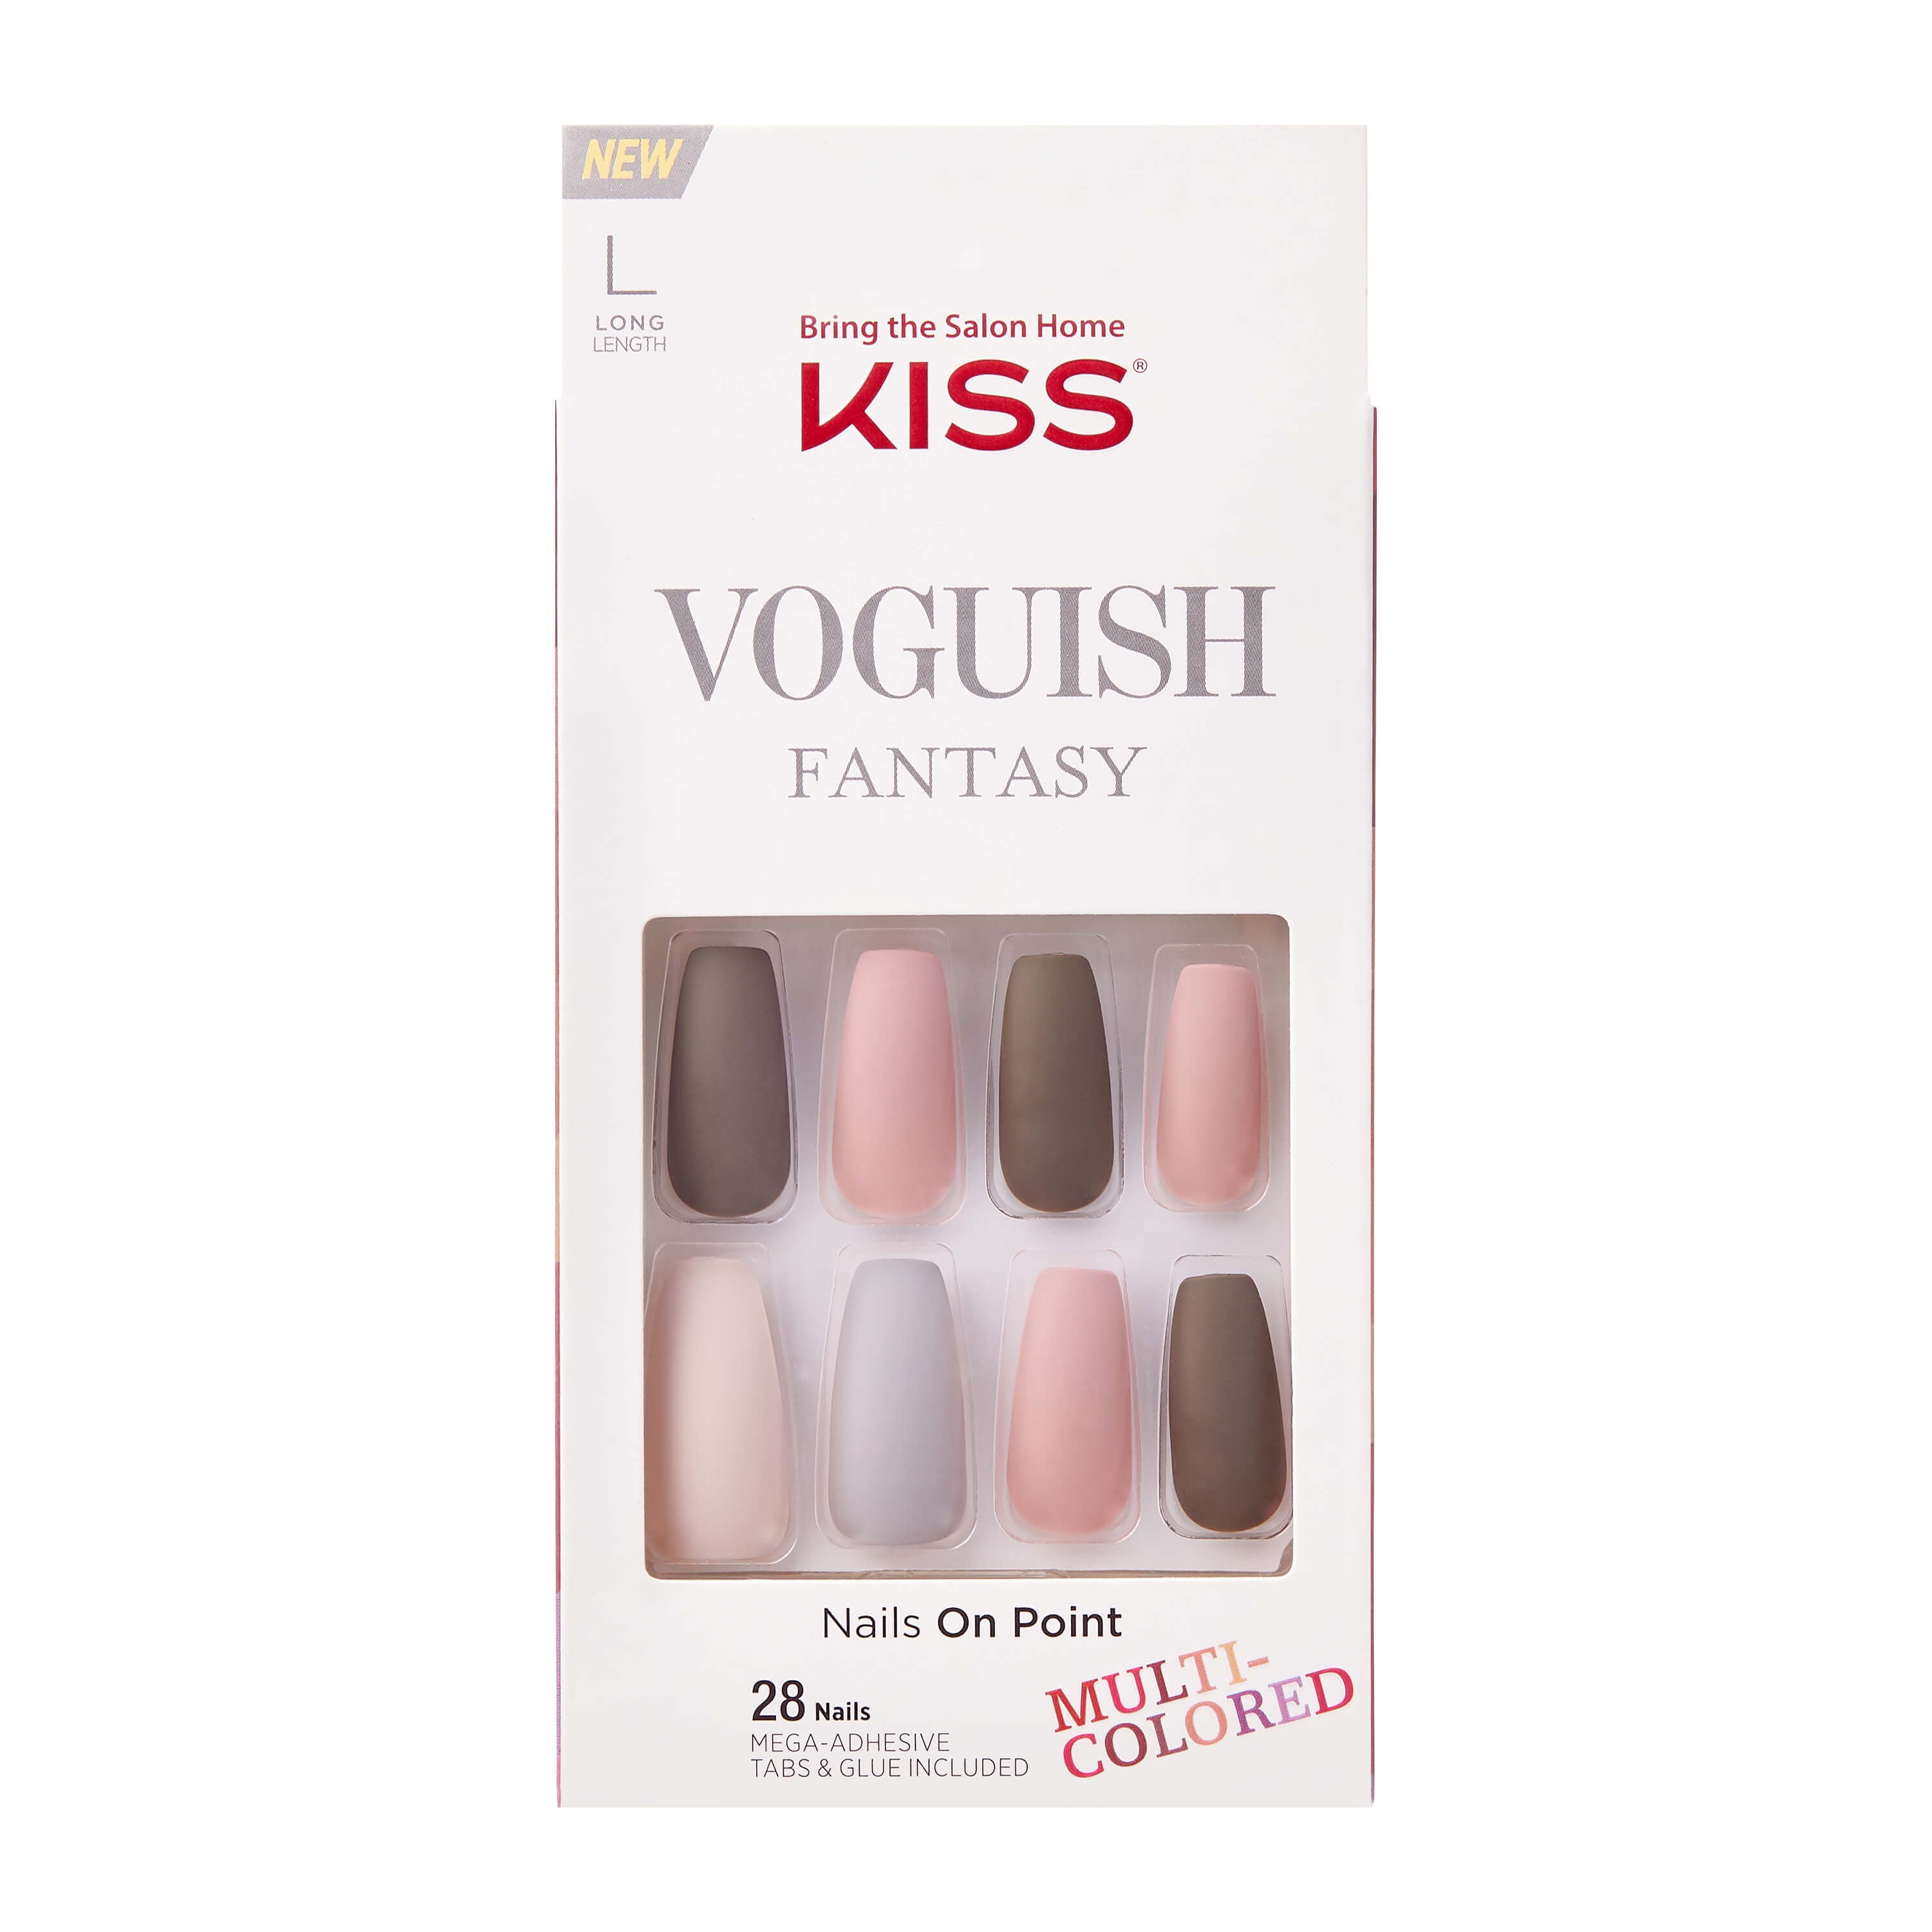 KISS Voguish Fantasy Nails - Online -